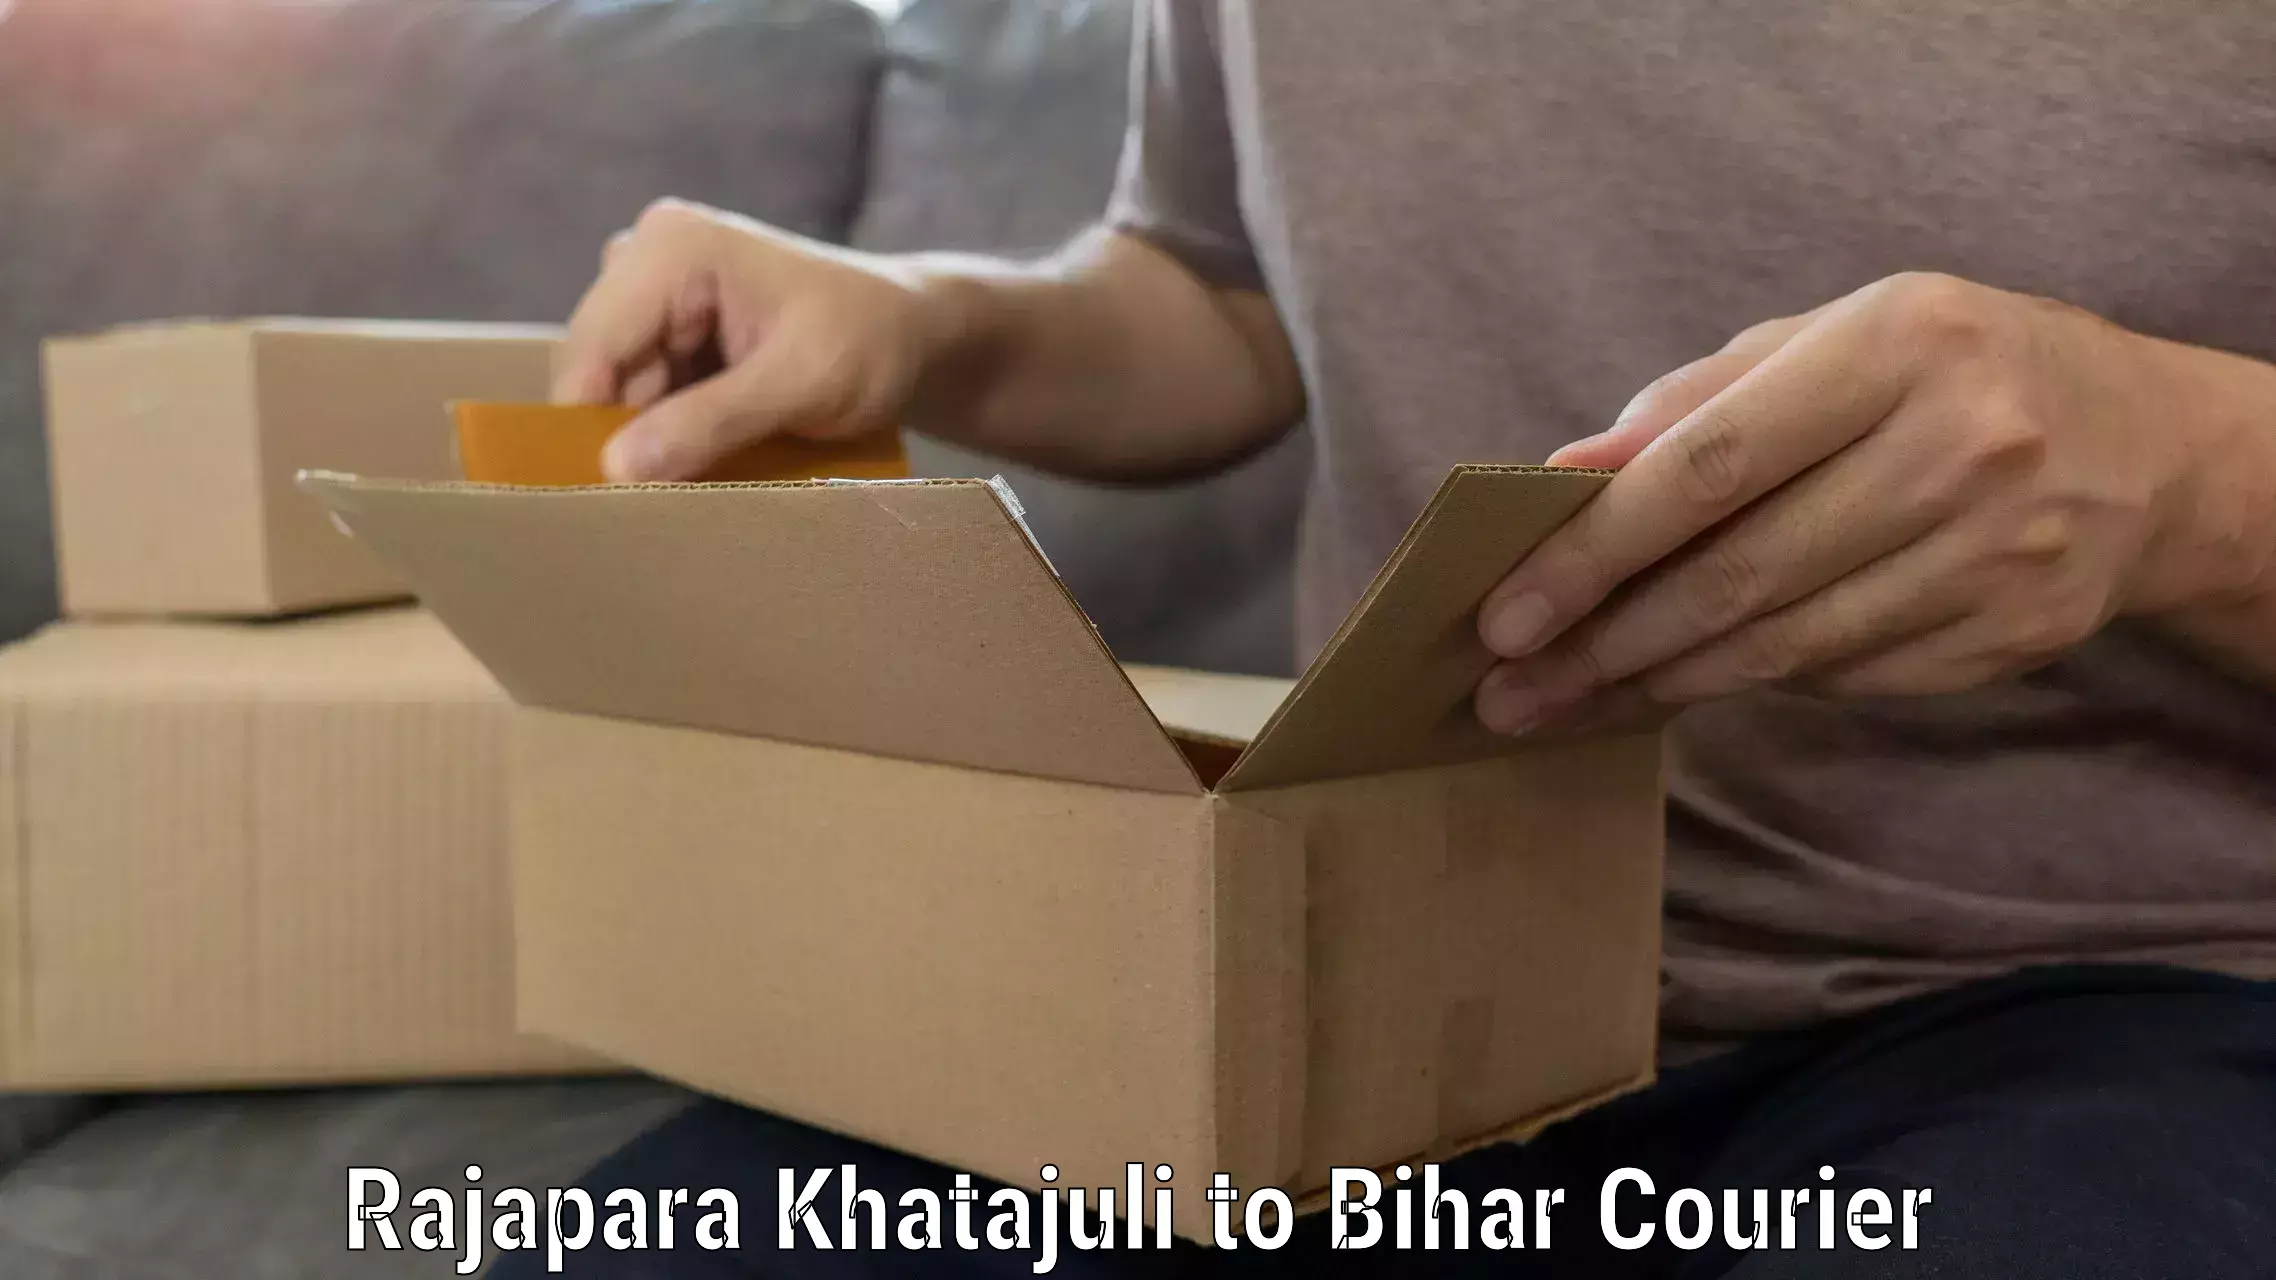 Furniture delivery service Rajapara Khatajuli to Pupri